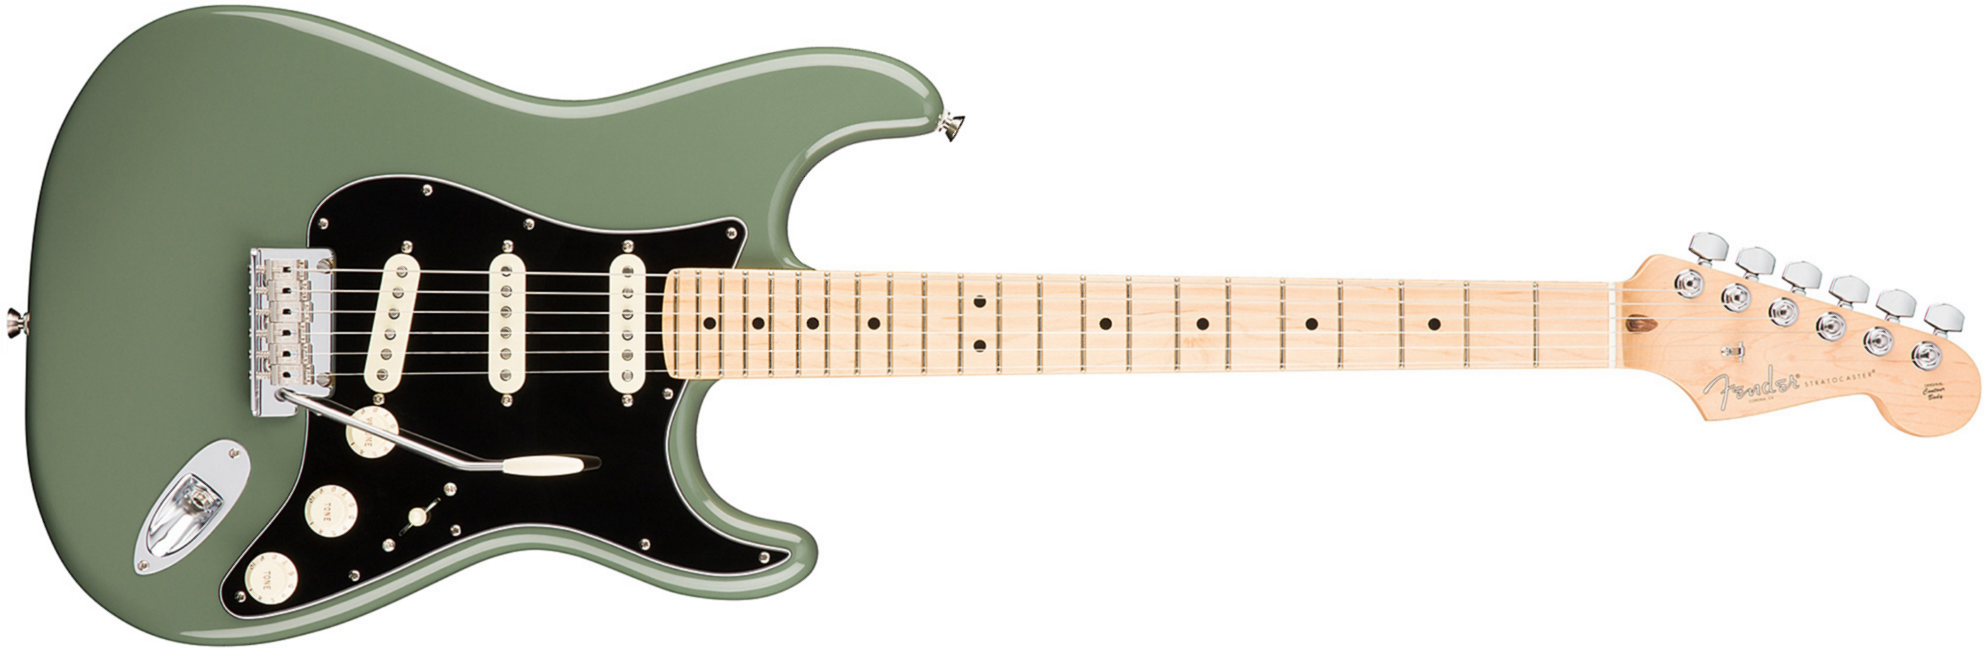 Fender Strat American Professional 2017 3s Usa Mn - Antique Olive - Guitarra eléctrica con forma de str. - Main picture